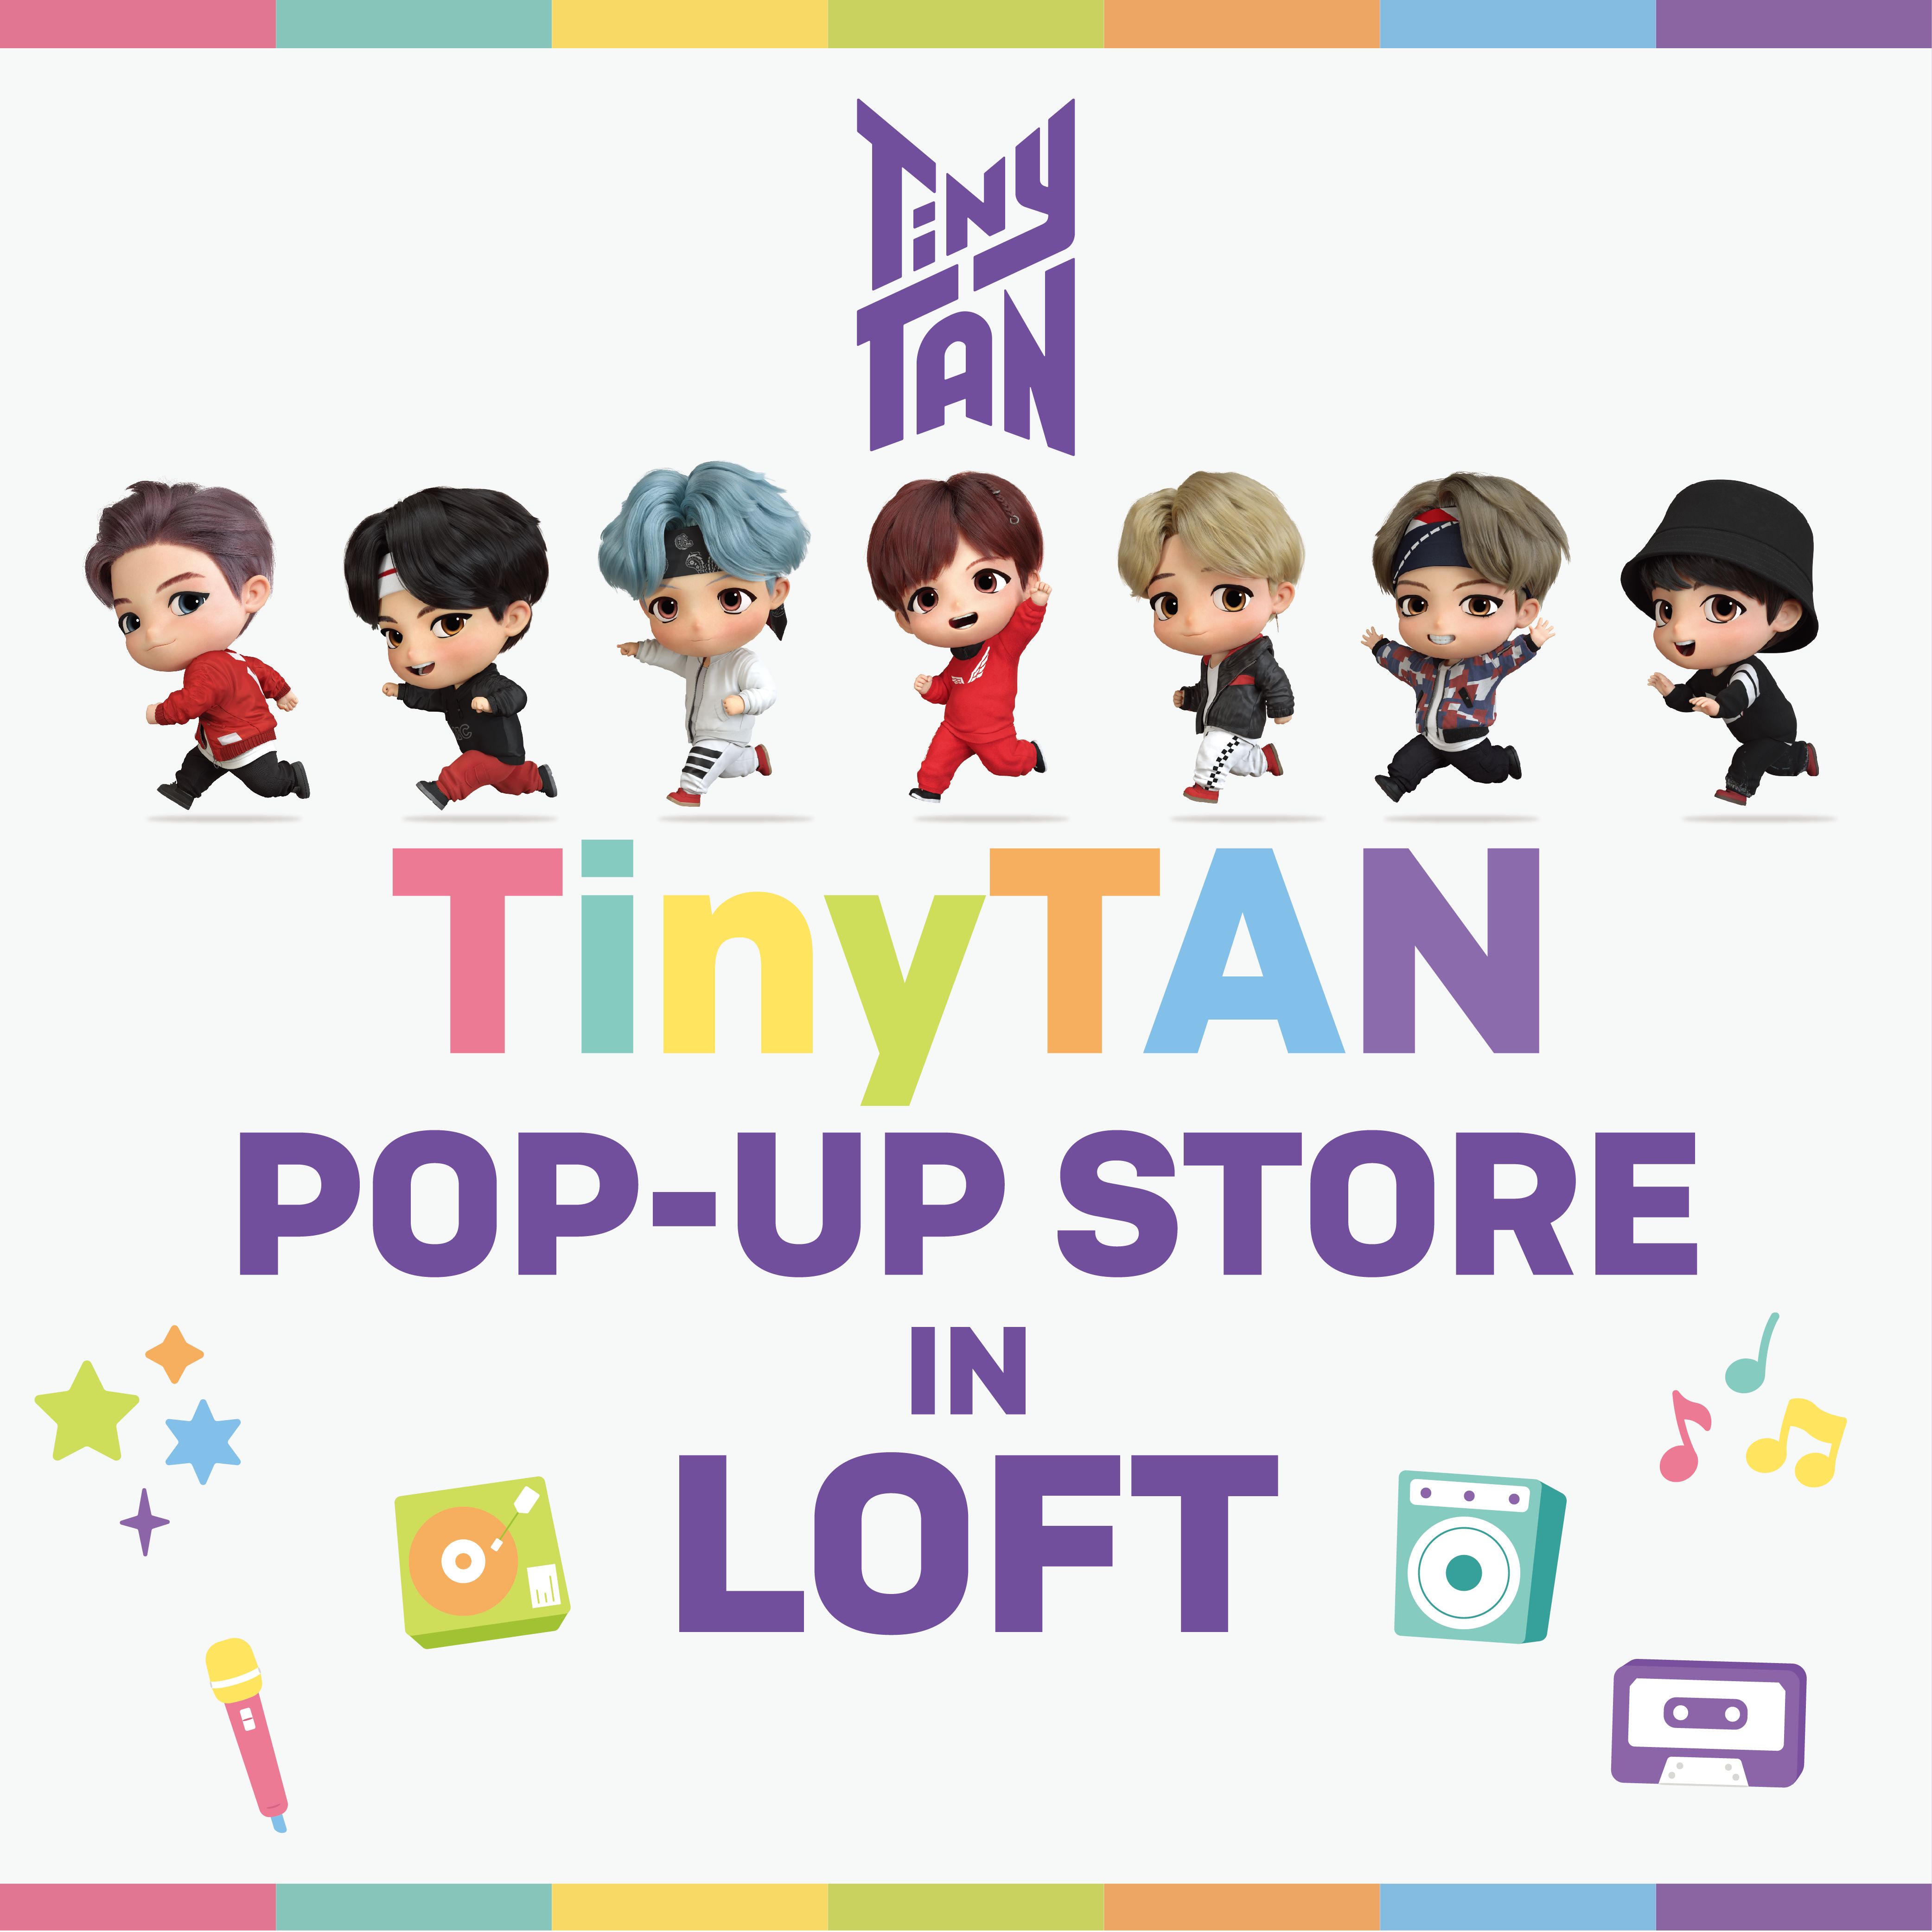 TinyTAN POP-UP STORE IN LOFT